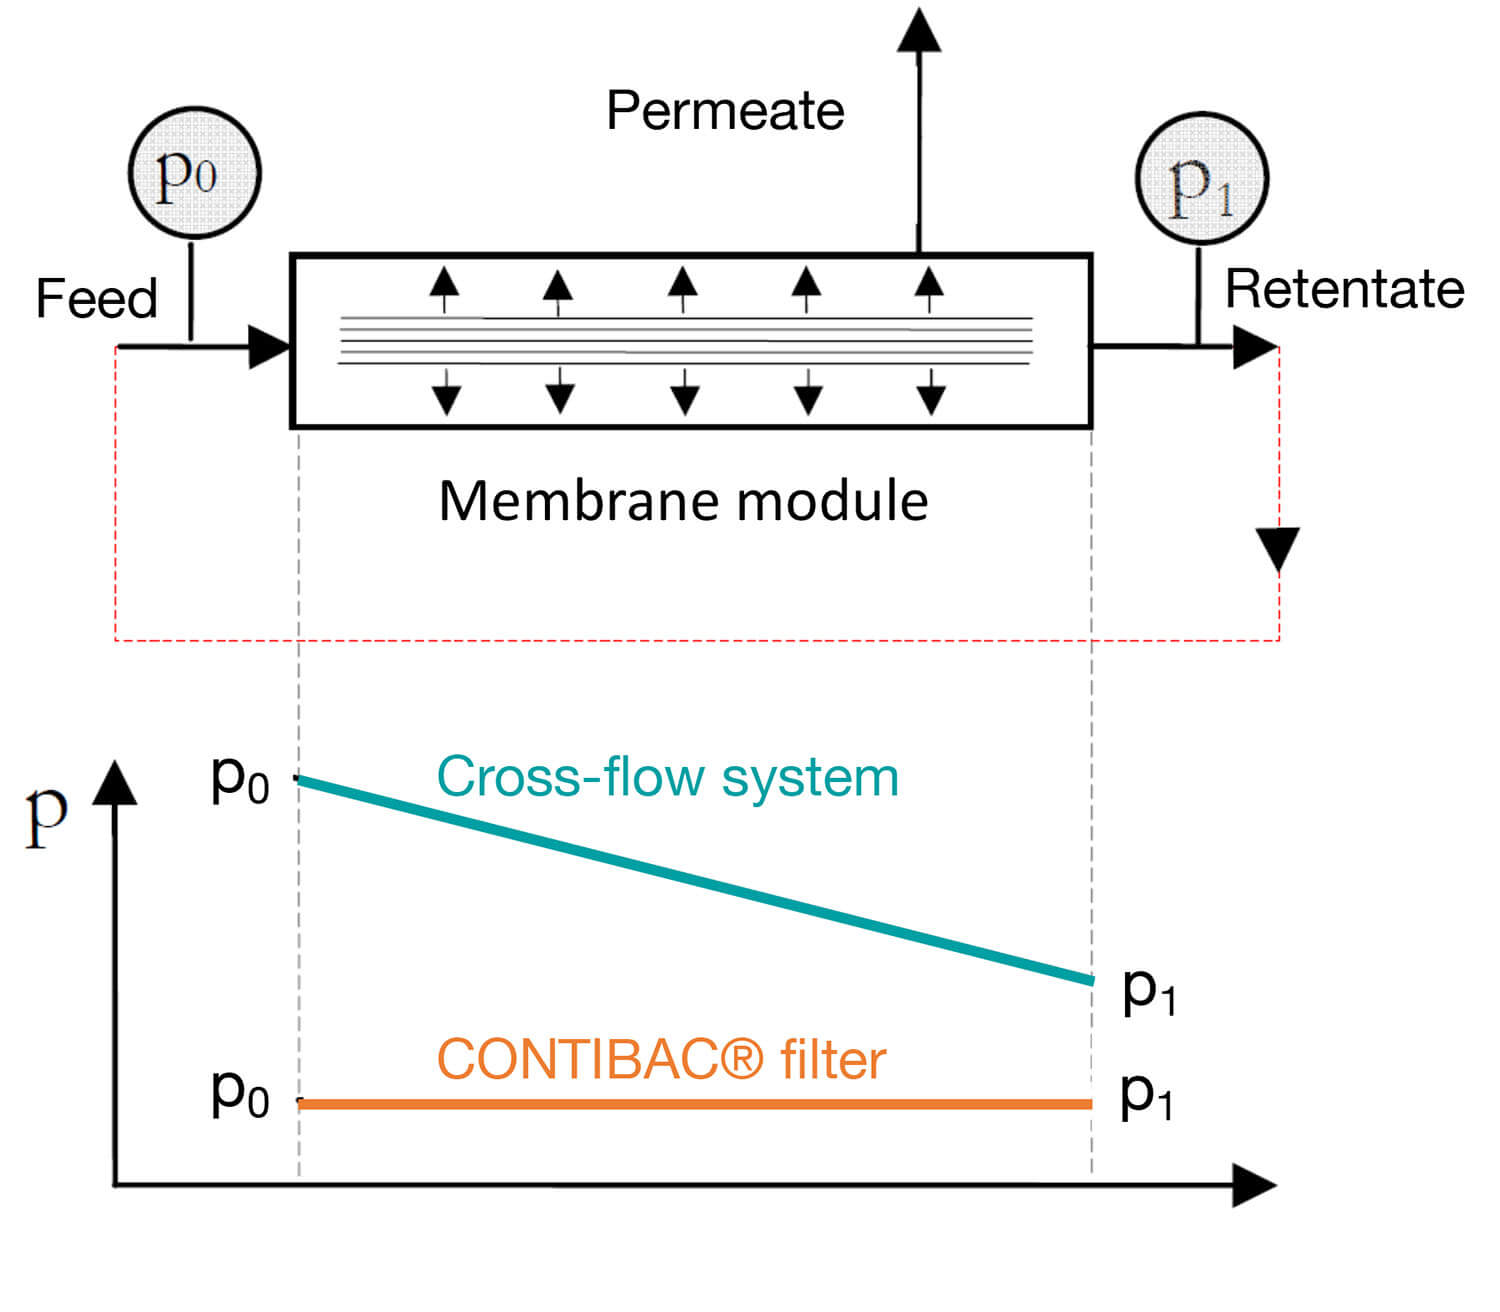 Cross-flow filtration vs. CONTIBAC® Filter